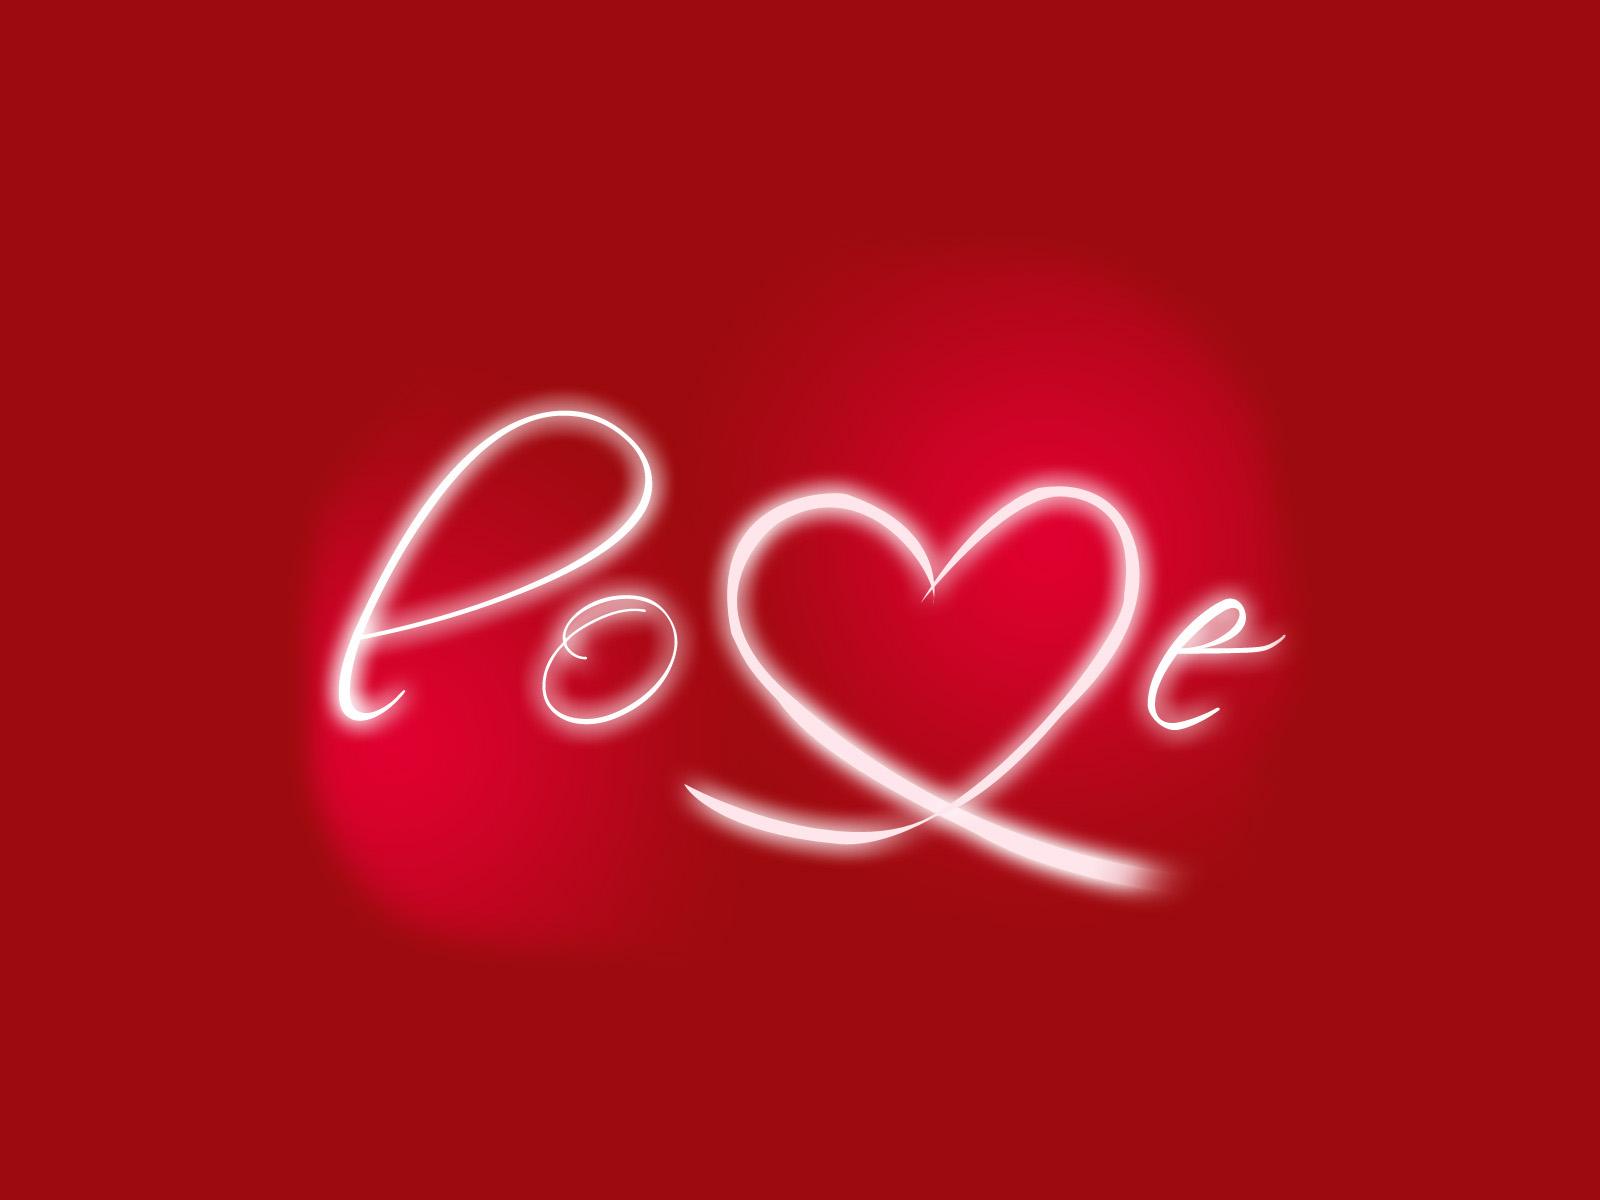 Love logo wallpaper. Love logo